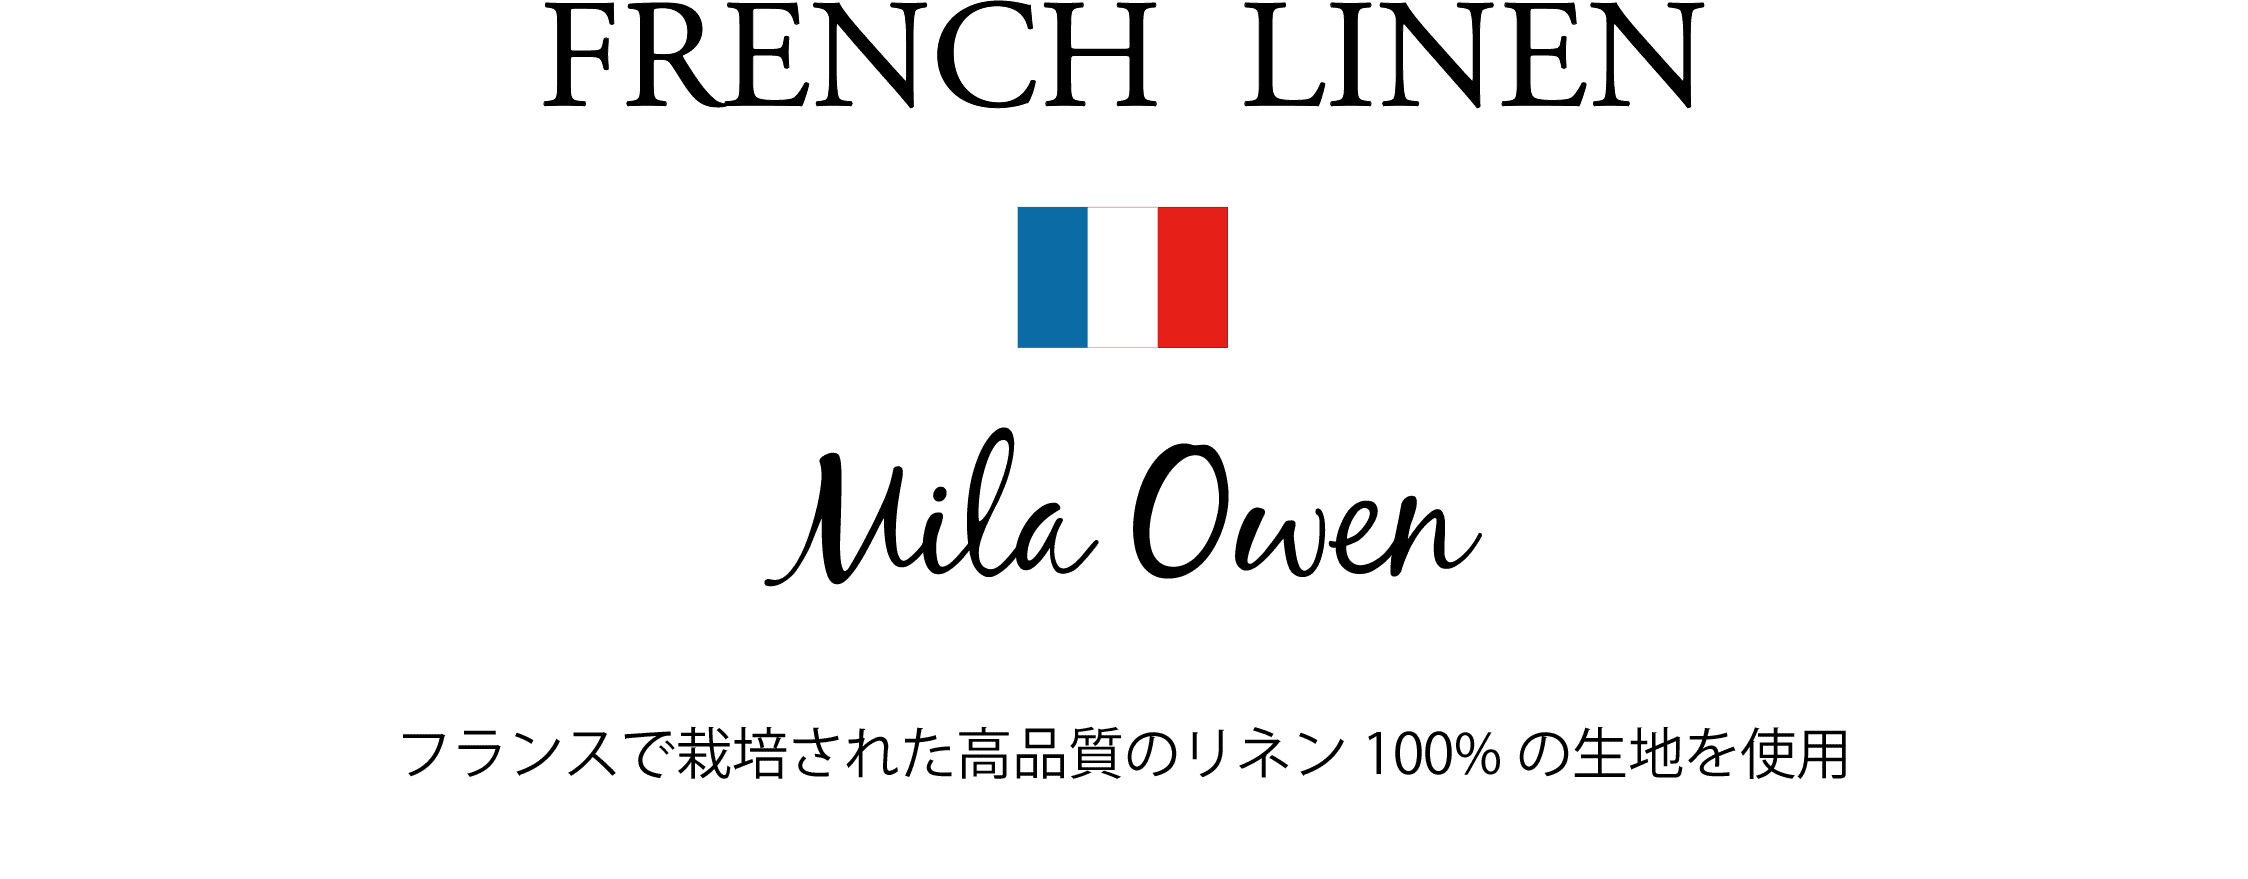 MILA OWEN FRENCH LINEN COLLECTION フランスで栽培された高品質のリネン100%の生地を使用